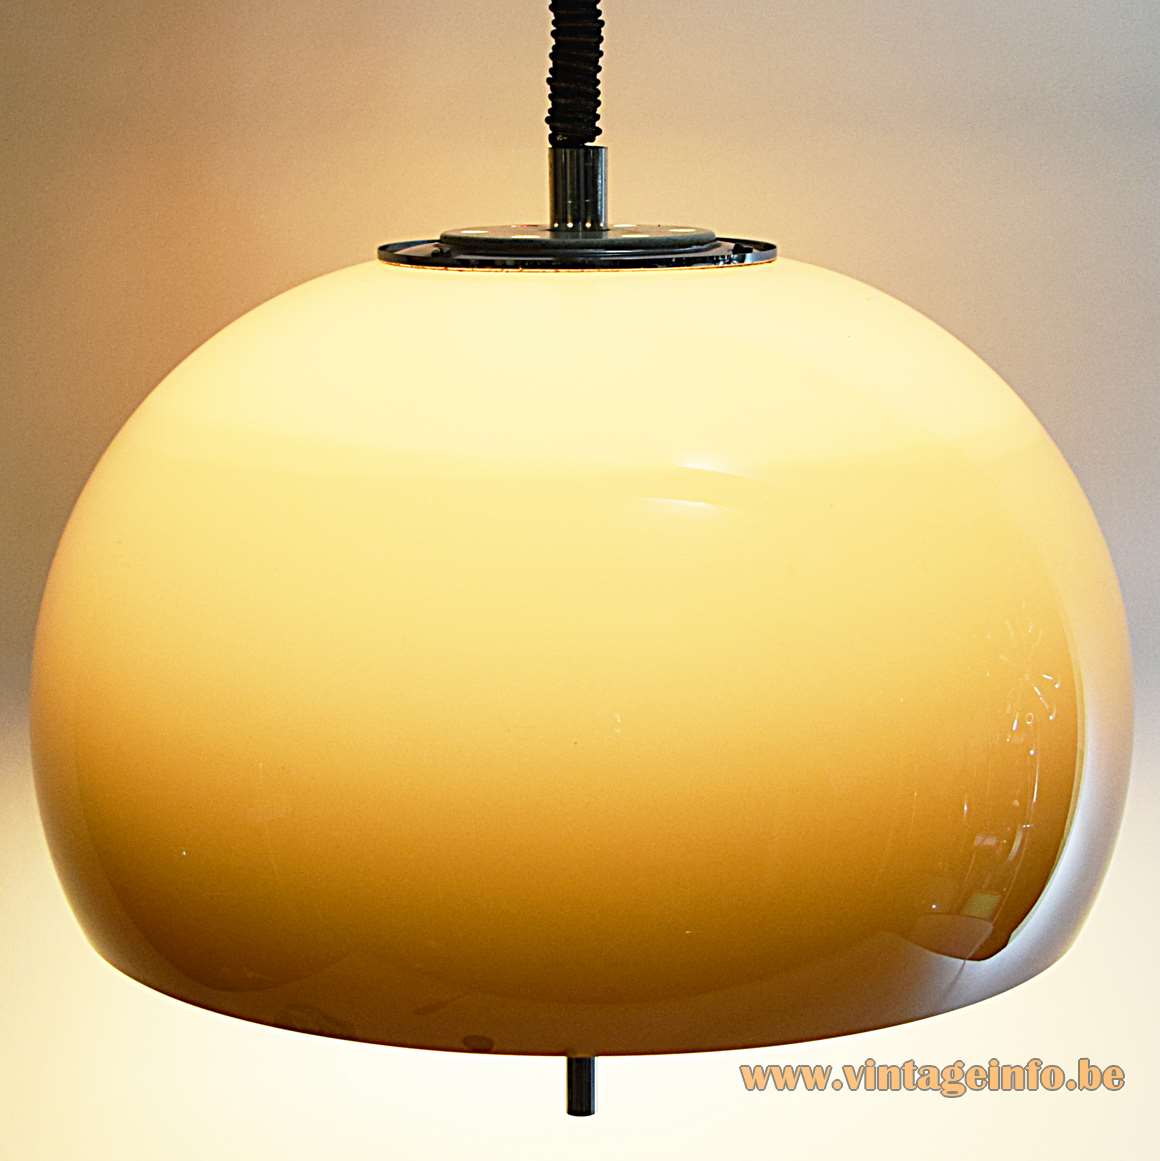 Harvey Guzzini Burgos pendant lamp brown acrylic globe lampshade white Perspex diffuser 1960s 1970s Italy iGuzzini